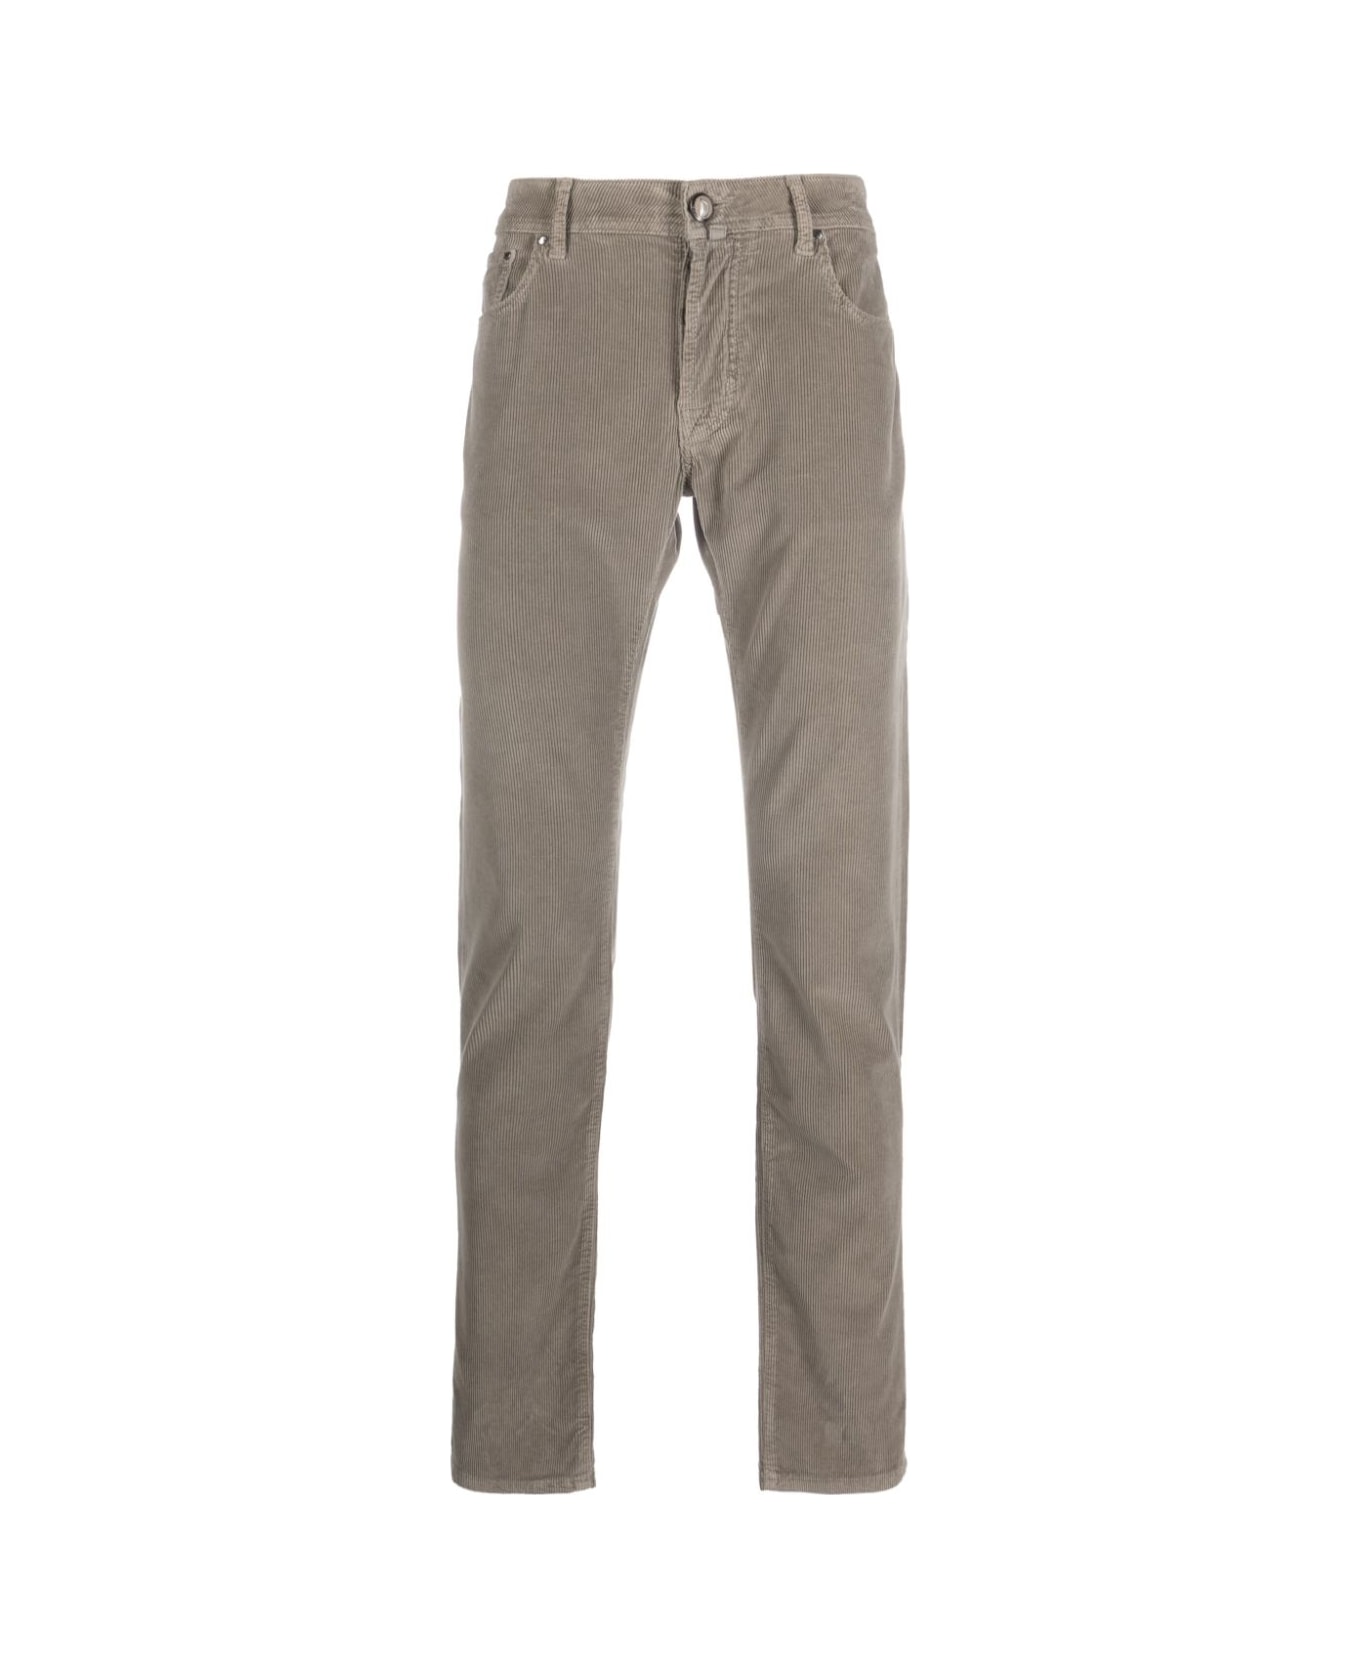 Jacob Cohen Bard Slim Fit Jeans - Elephant Grey